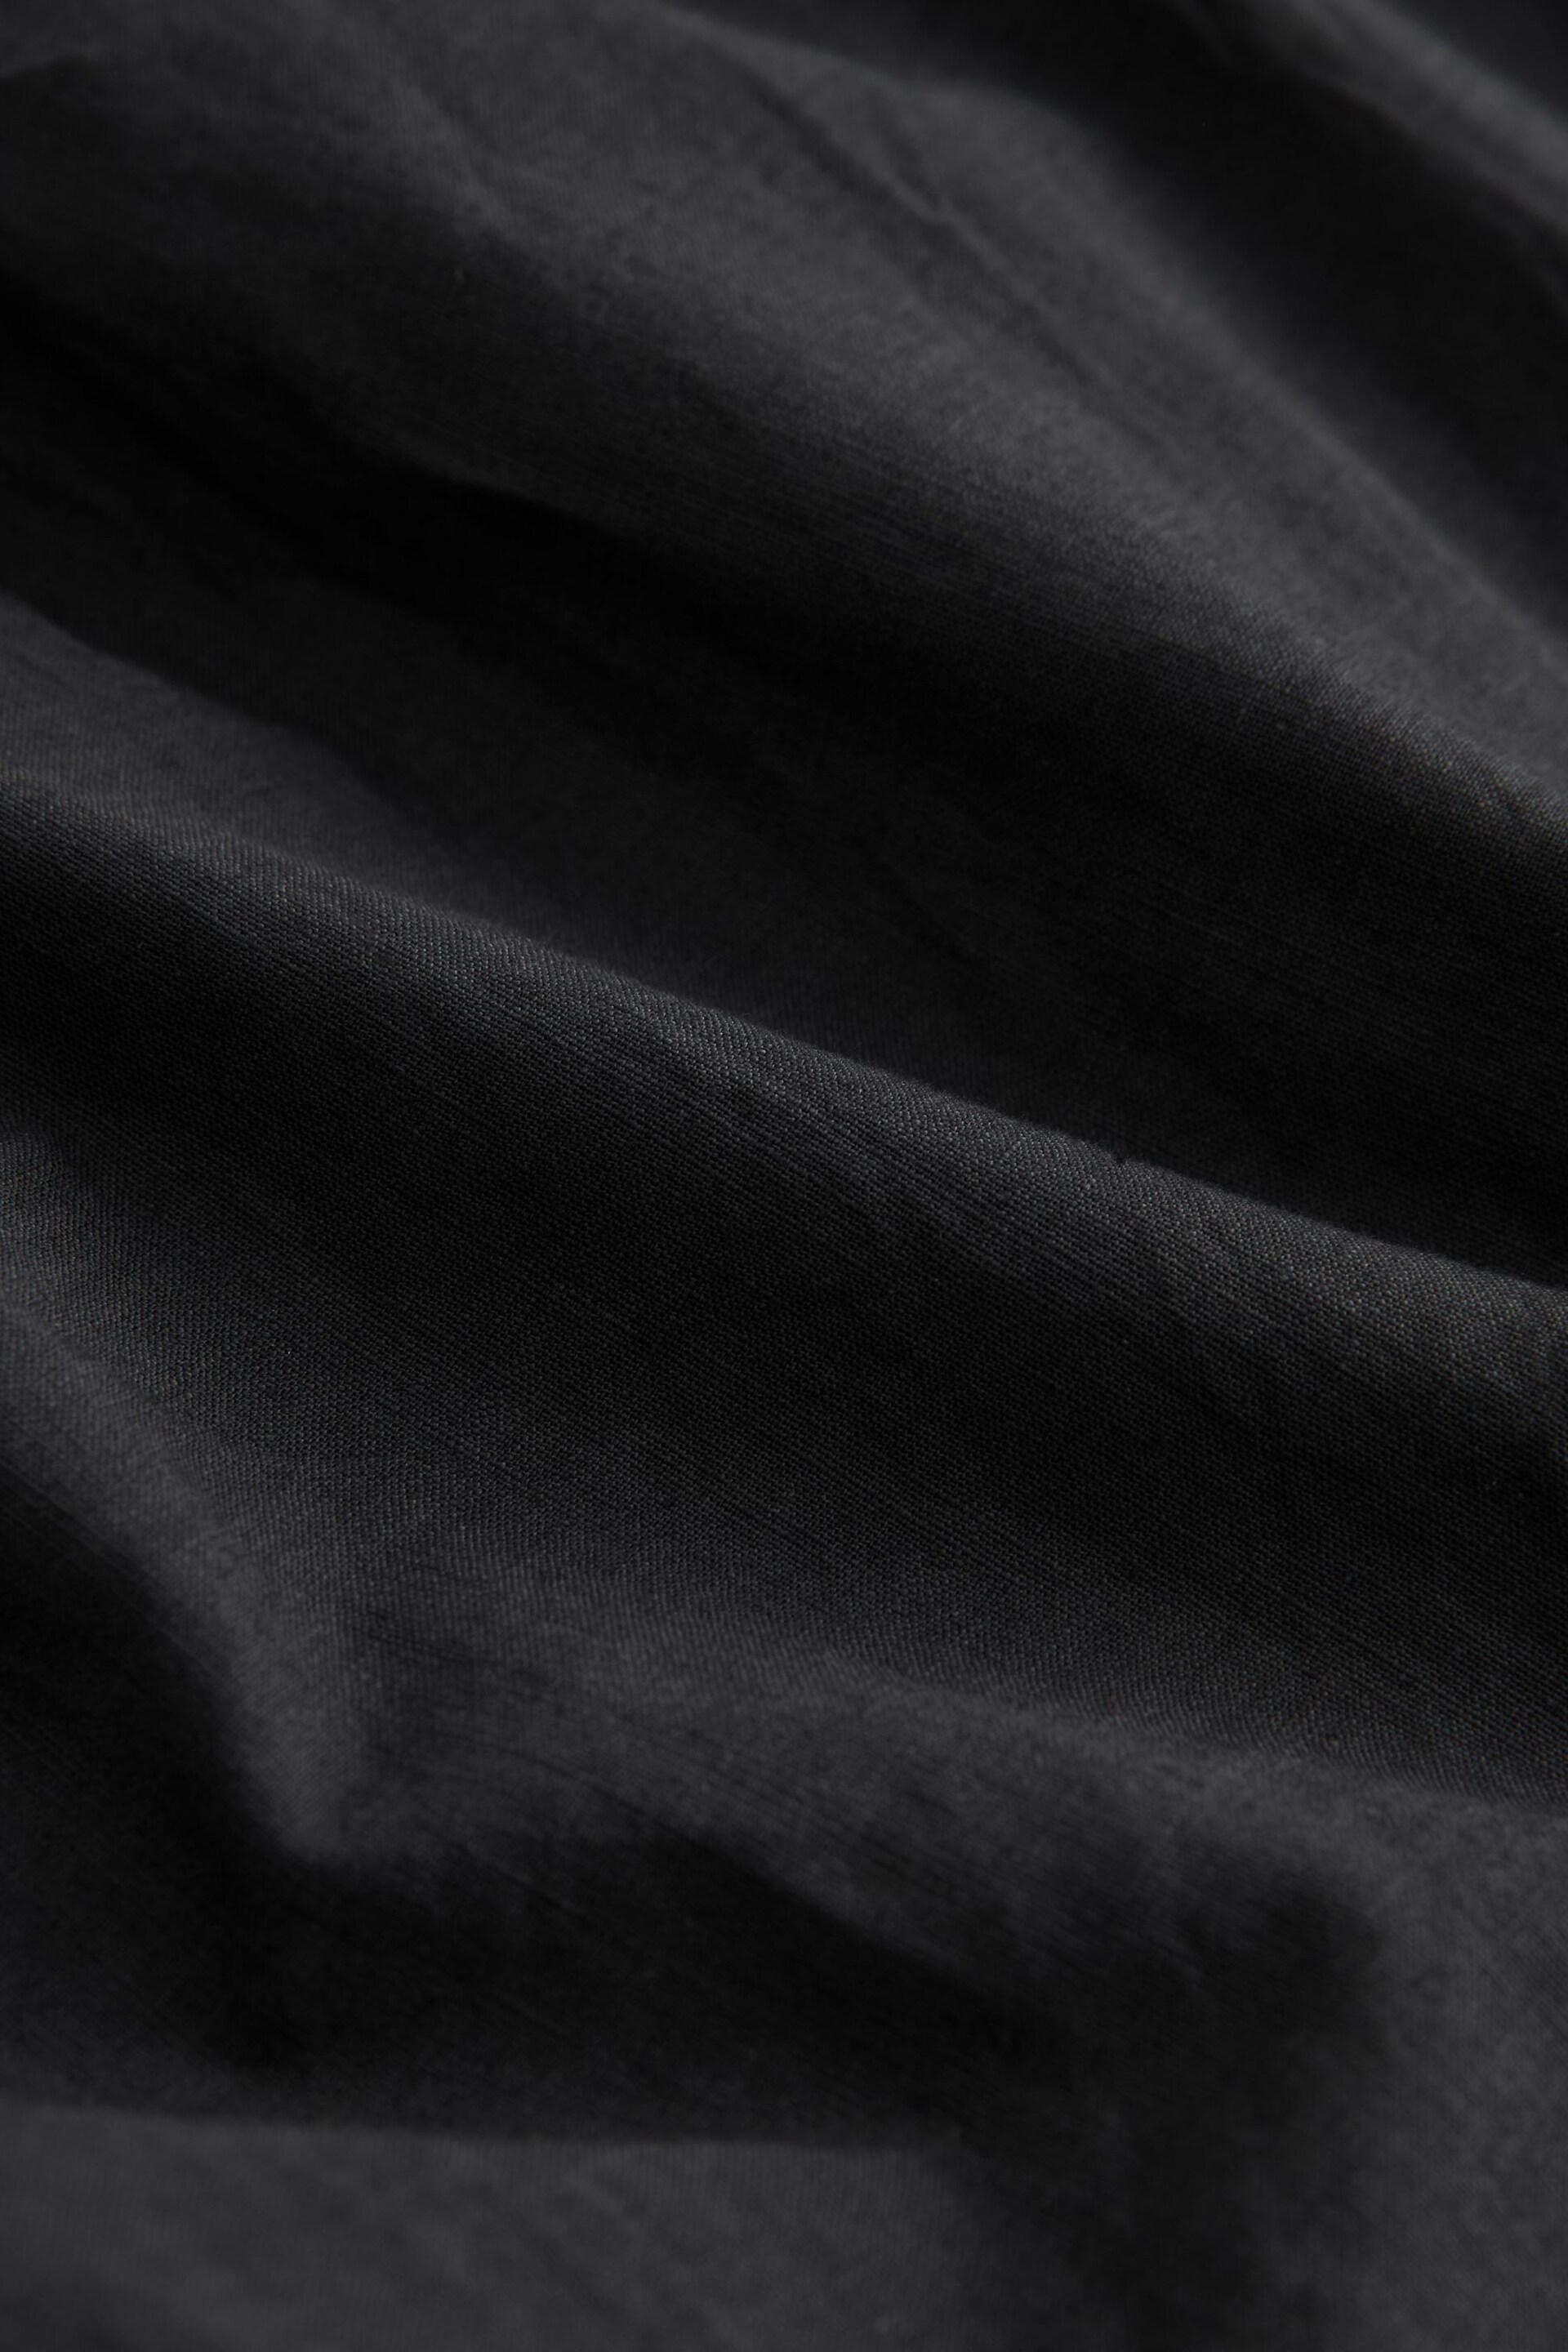 Black Puff Sleeve Maxi Dress - Image 6 of 6